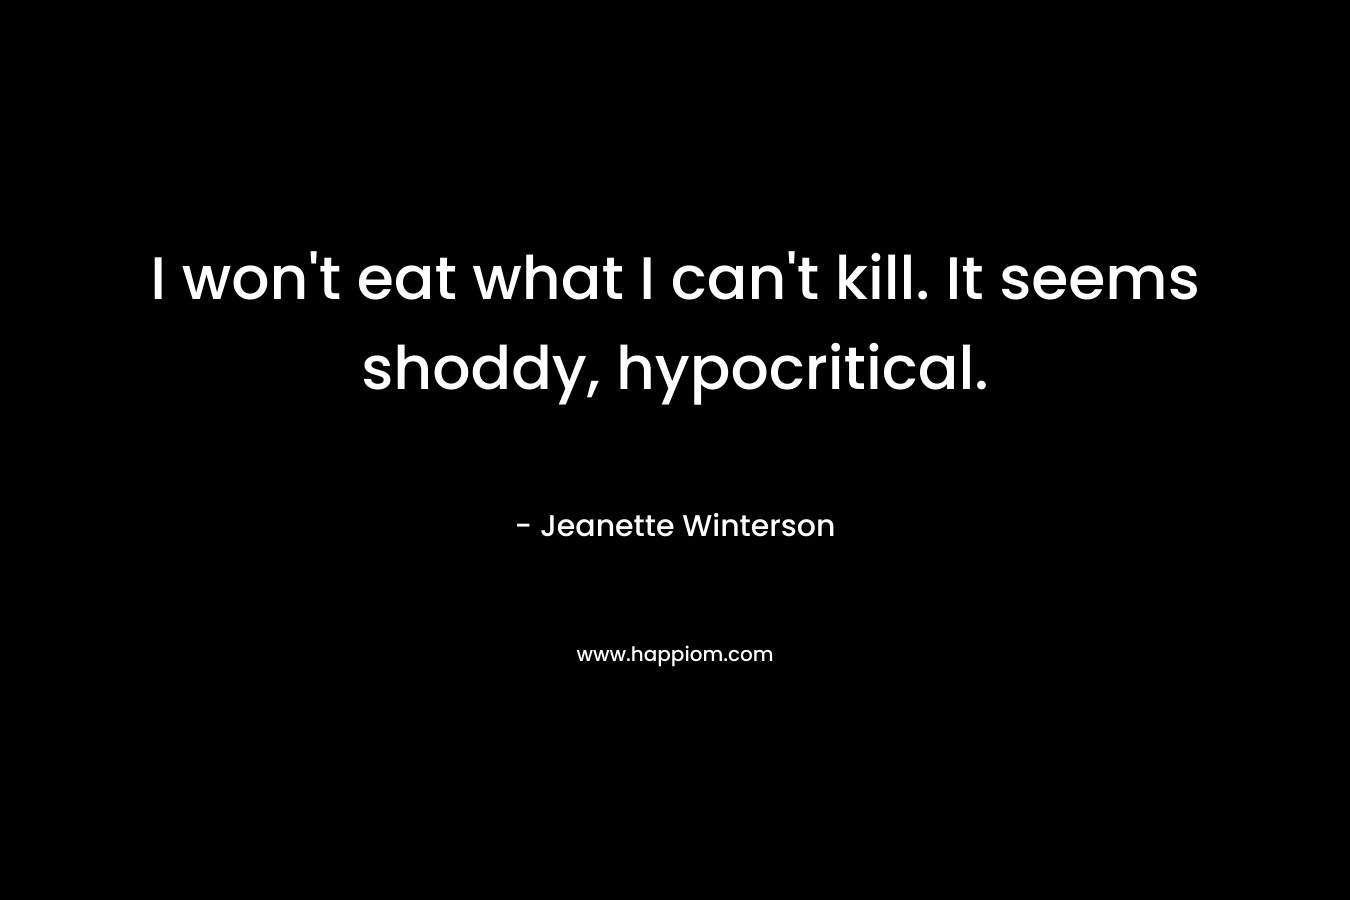 I won't eat what I can't kill. It seems shoddy, hypocritical.